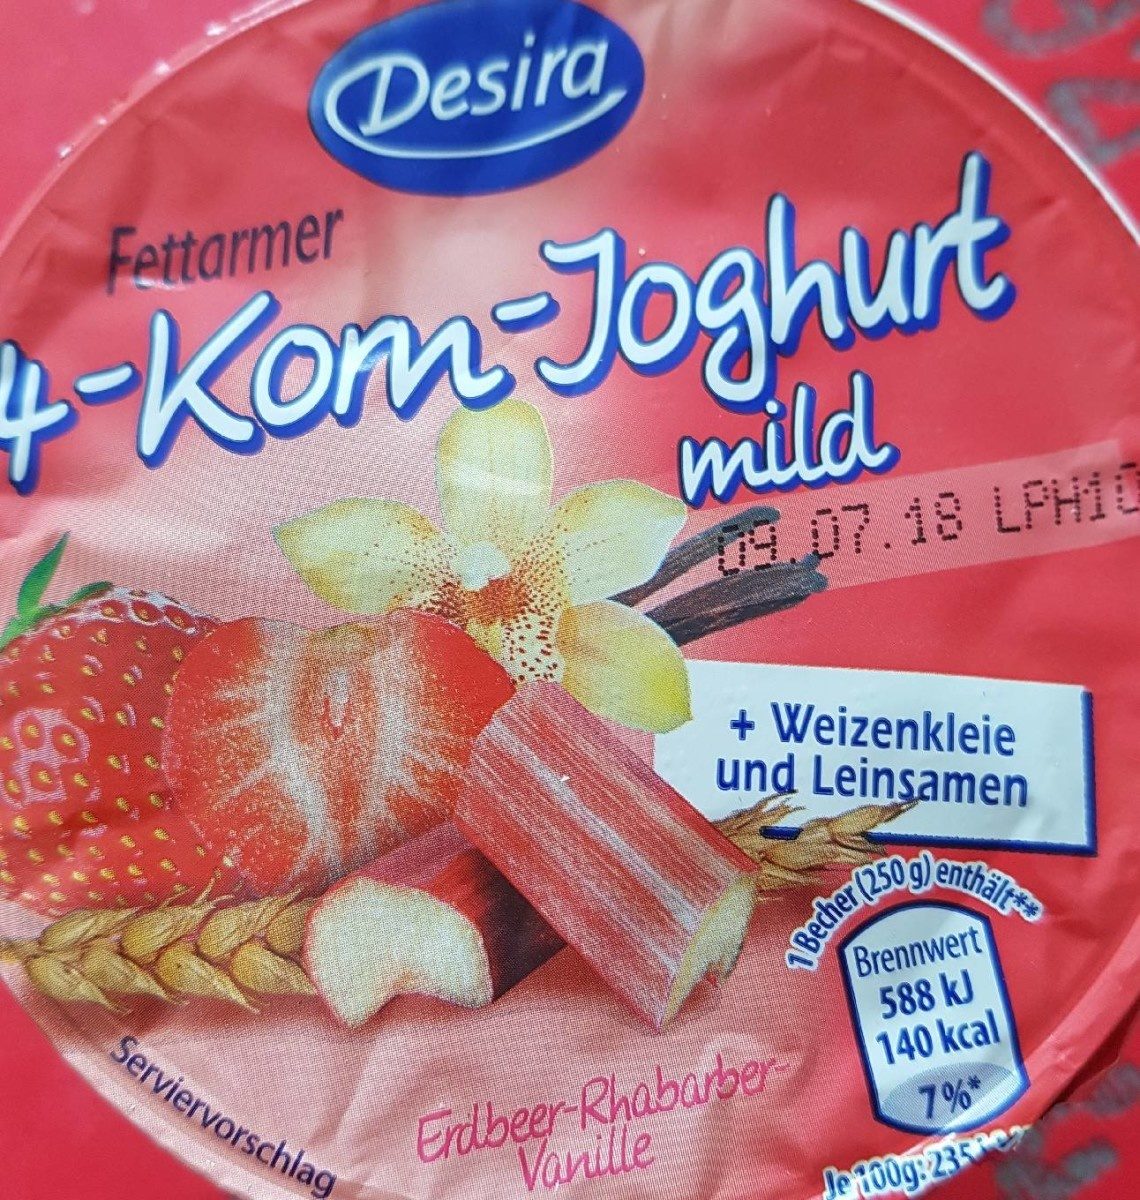 Leichter 4 Korn Joghurt mild, Bircher Müsli, +Weiz... - Product - de